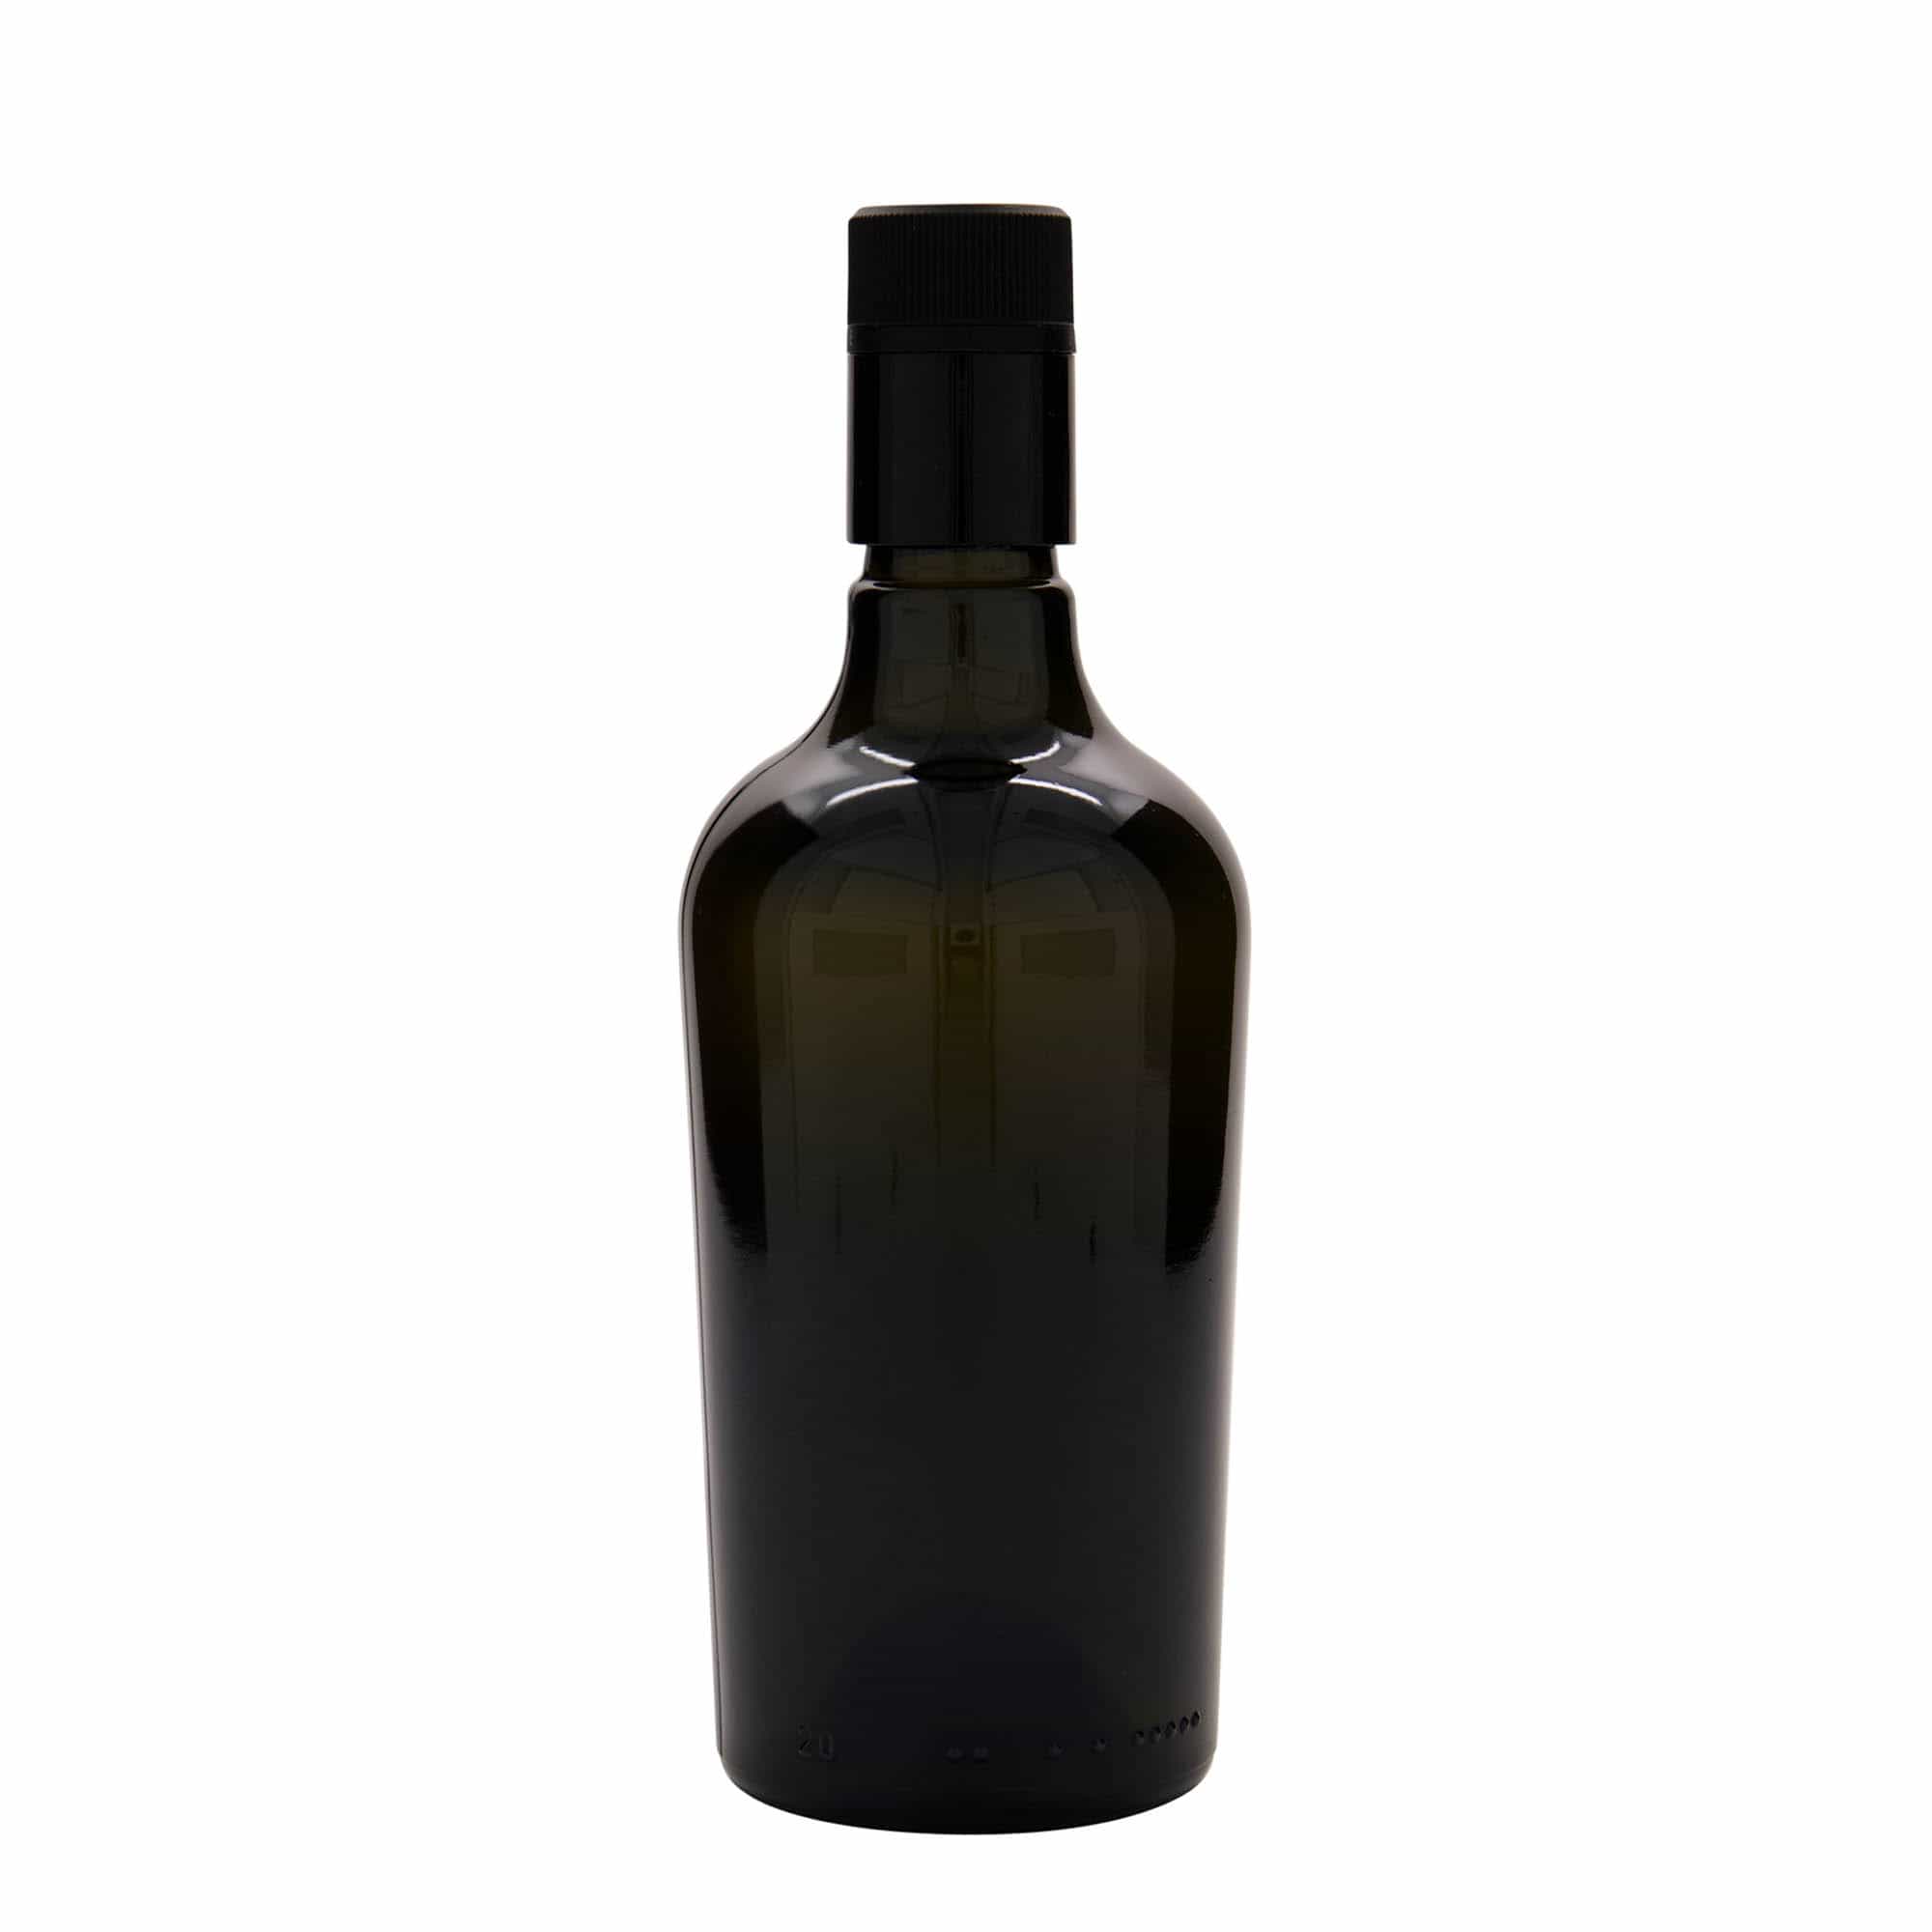 500 ml oil/vinegar bottle 'Oleum', glass, antique green, closure: DOP